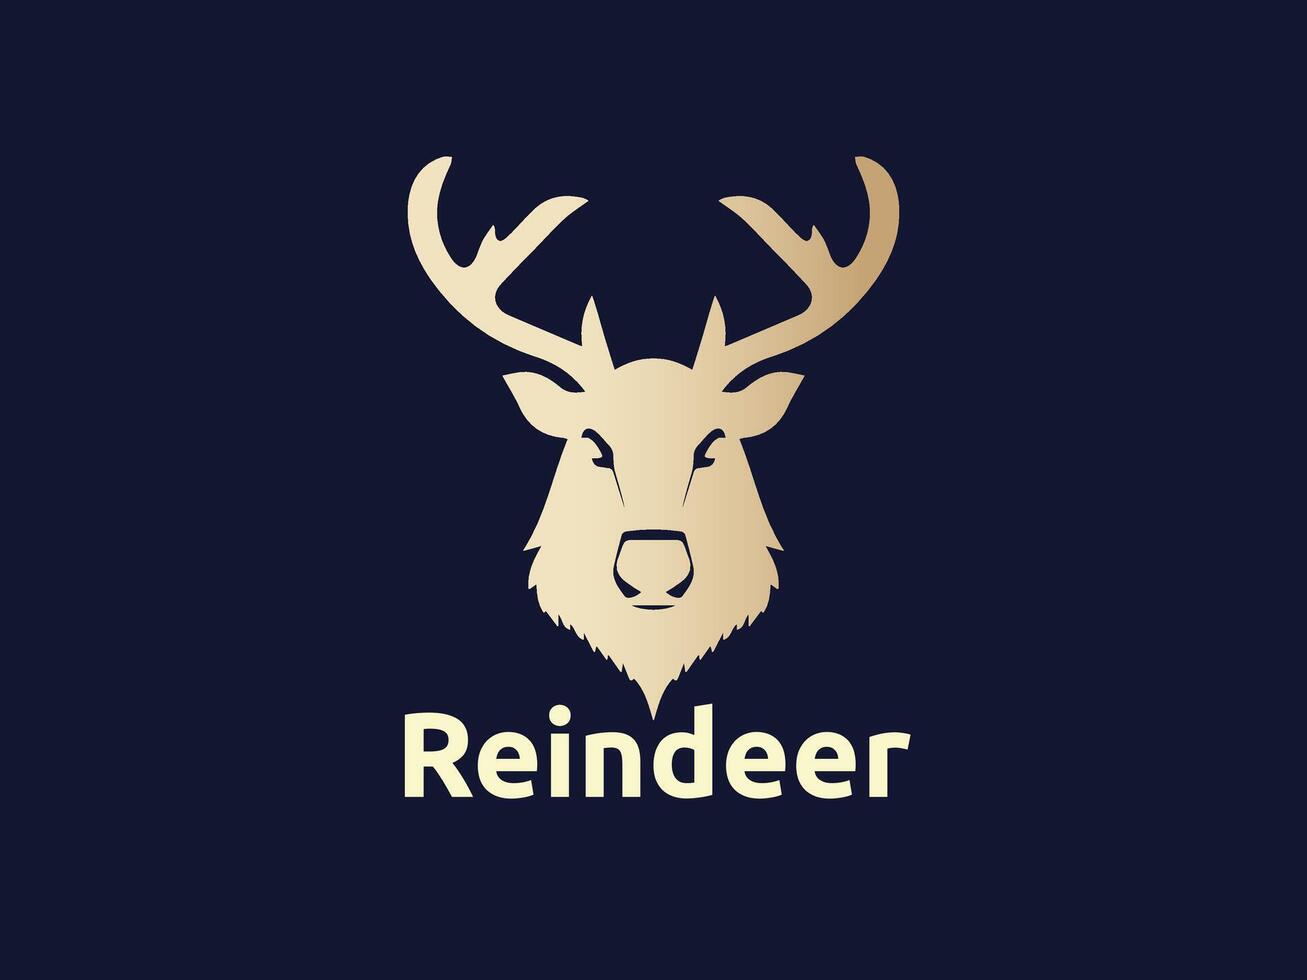 Reindeer logo design vector template. Deer logo design icon